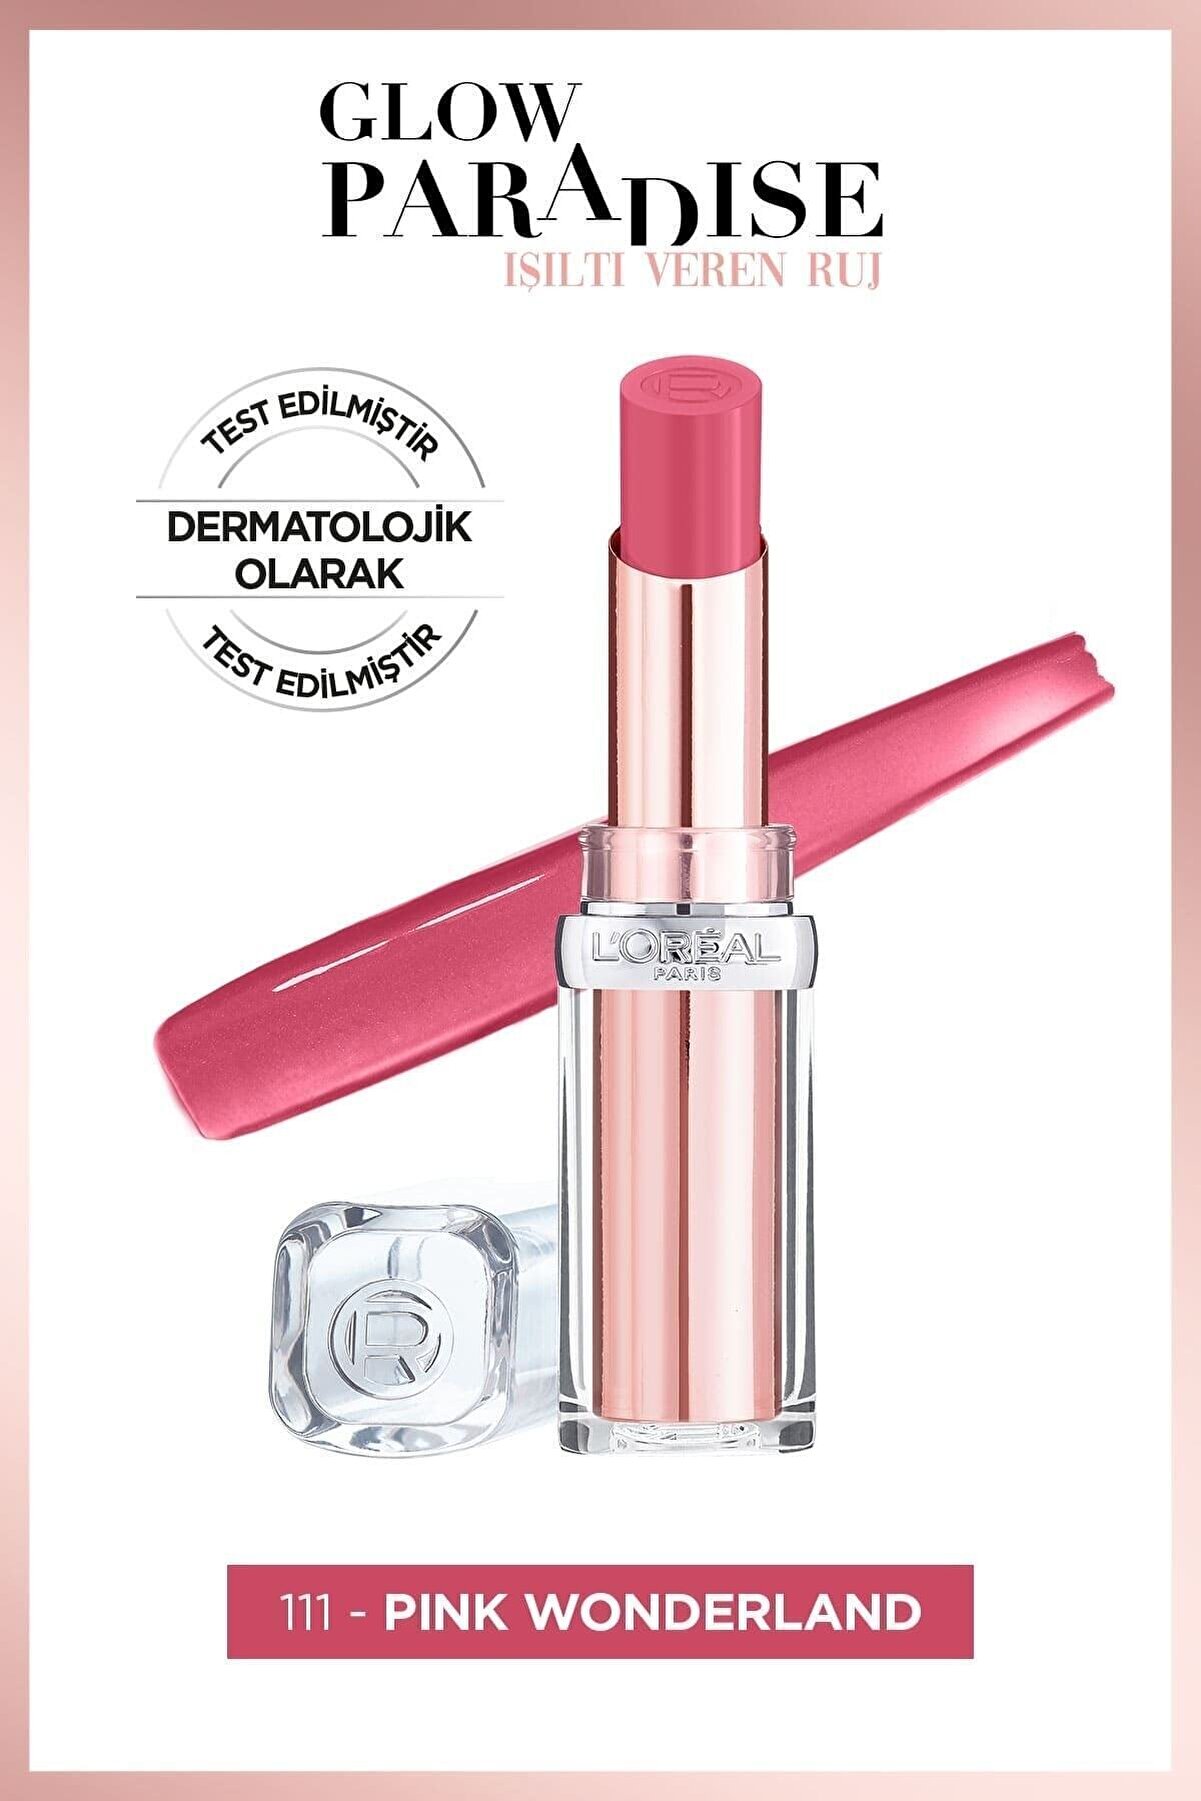 L'Oreal Paris L'oréal Paris Glow Paradise Balm-in-lipstick - Işıltı Veren Ruj 111 Pink Wonderland